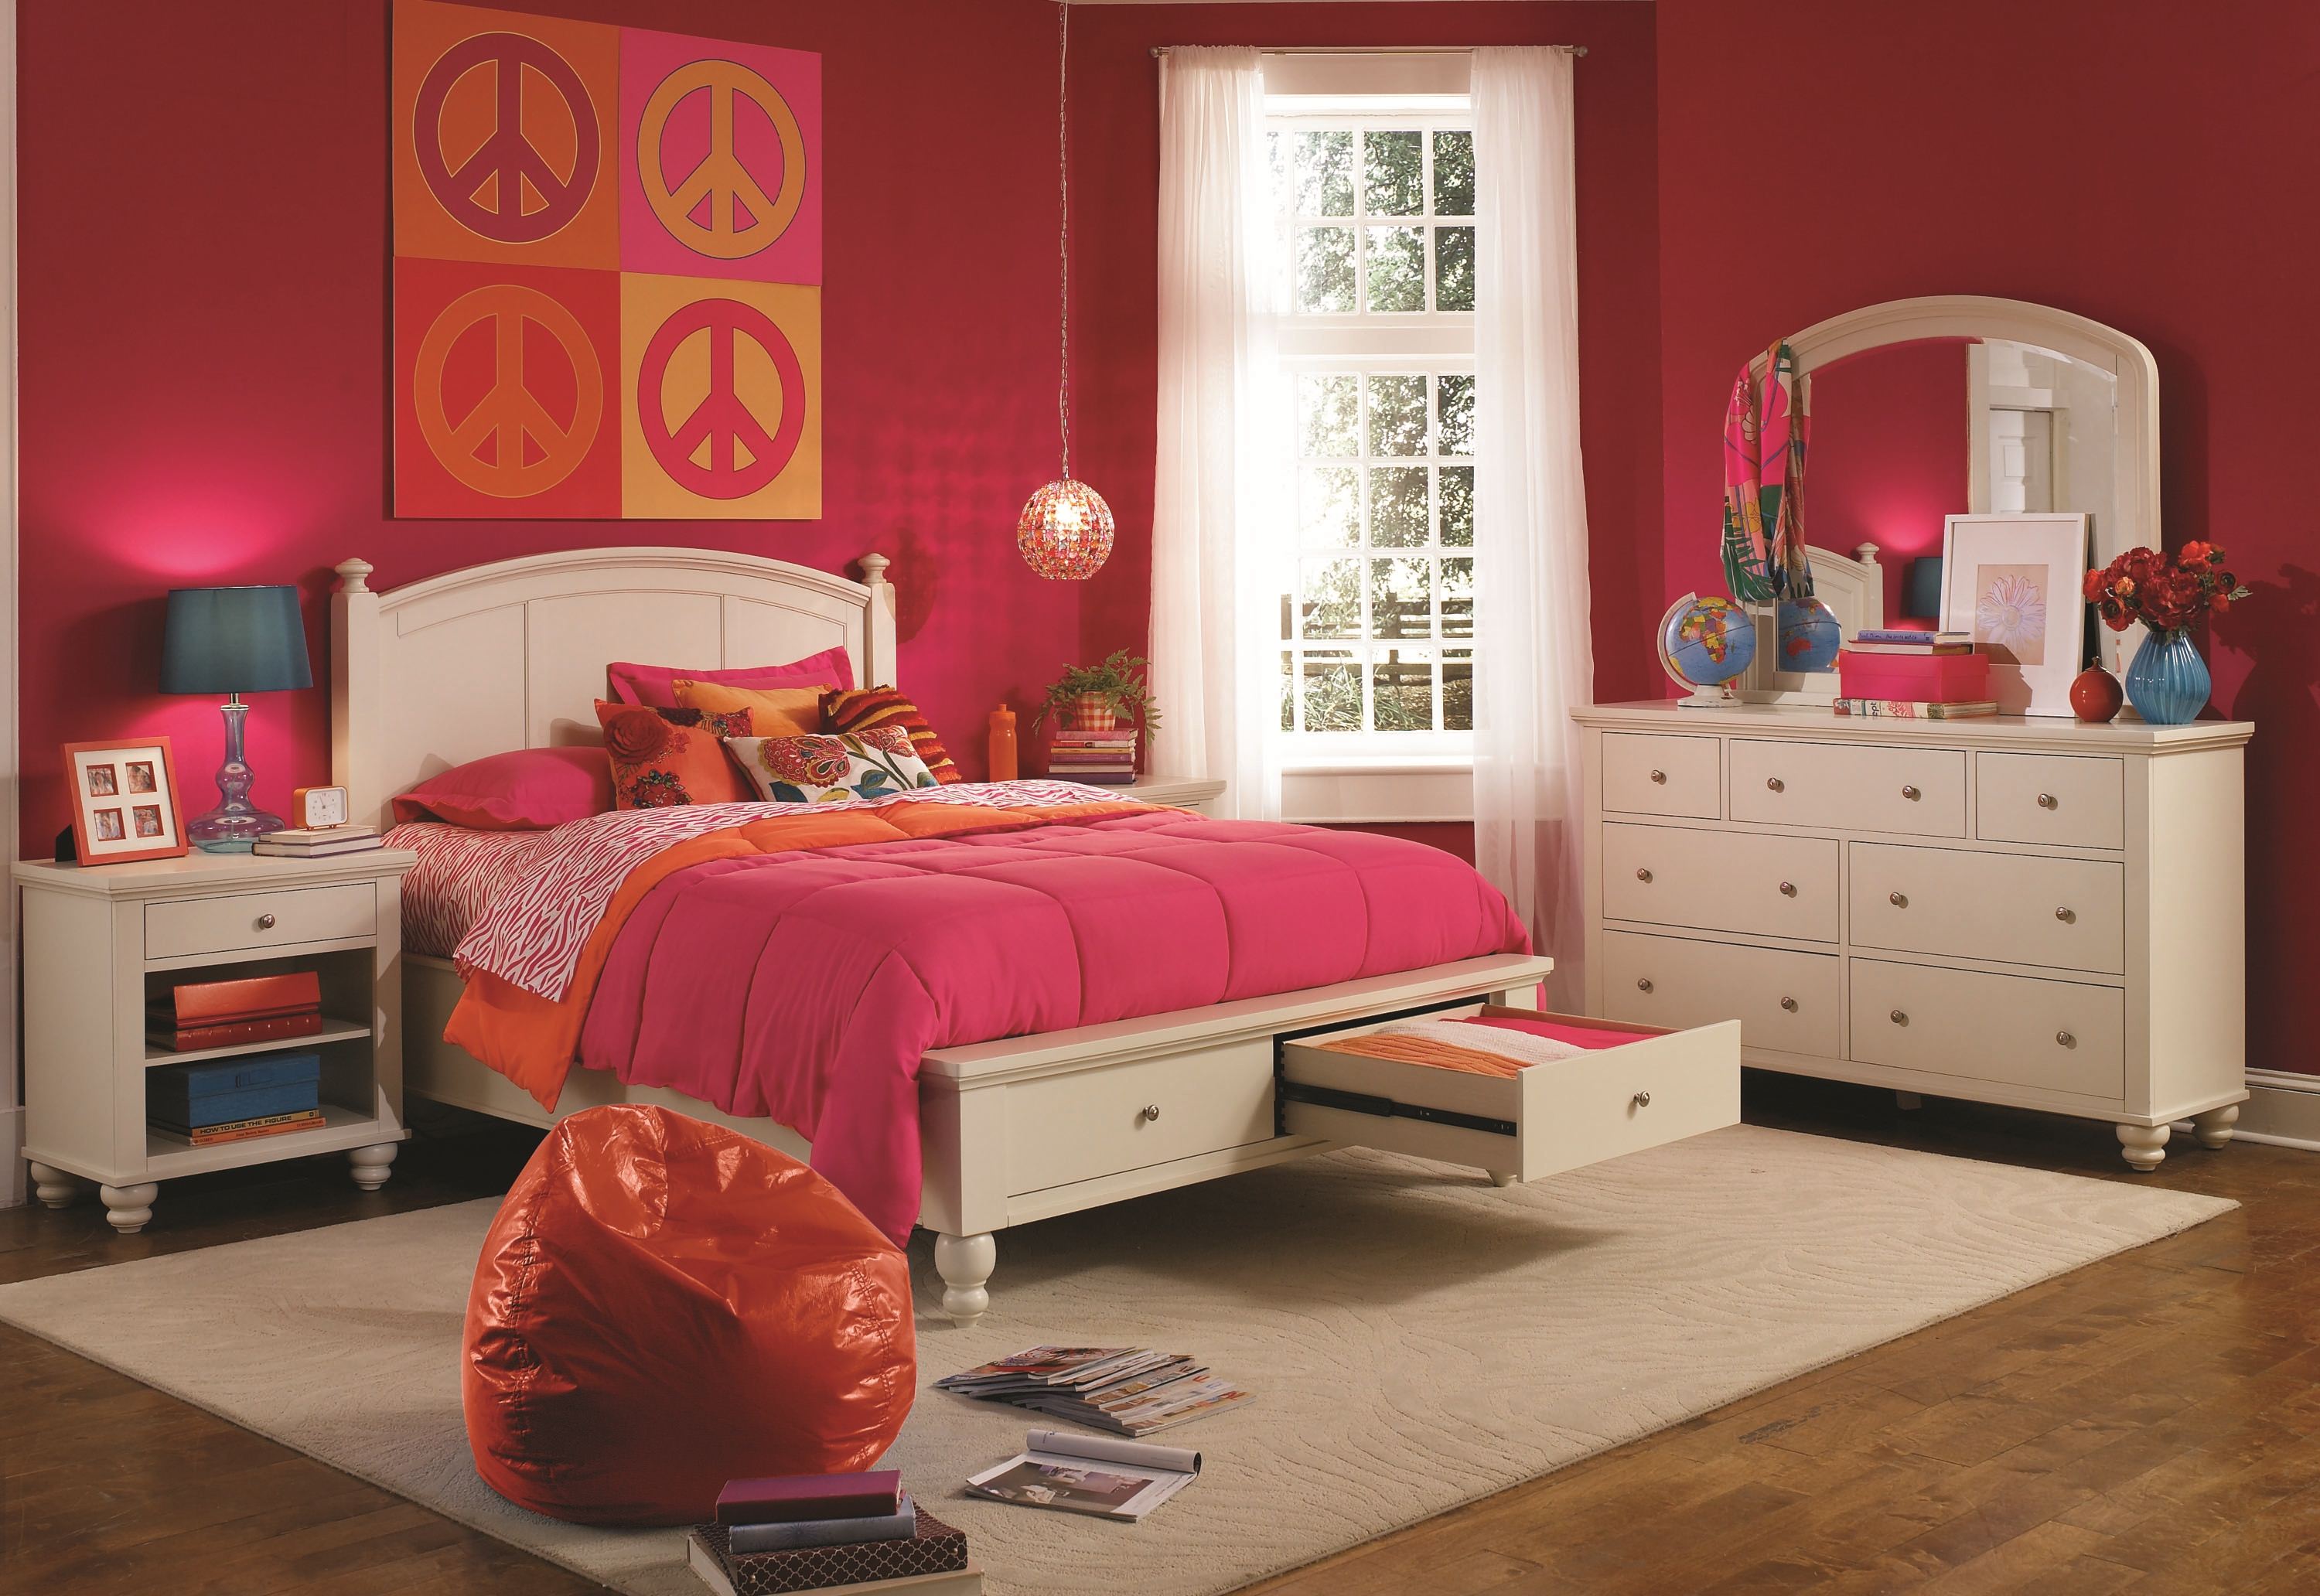 aspen furniture cambridge bedroom collection